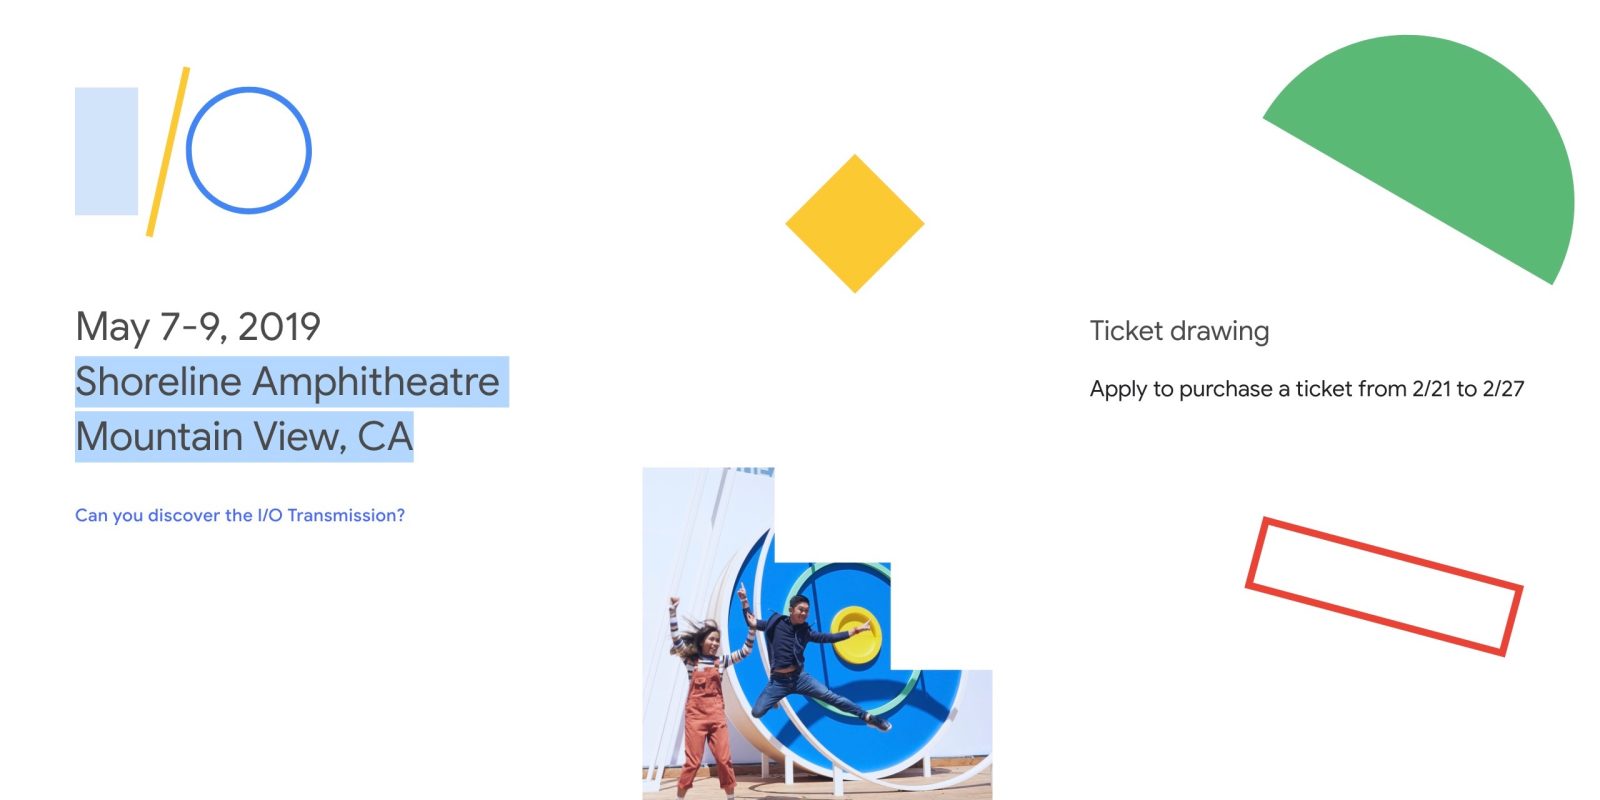 Google I/O 2019 ticket applications